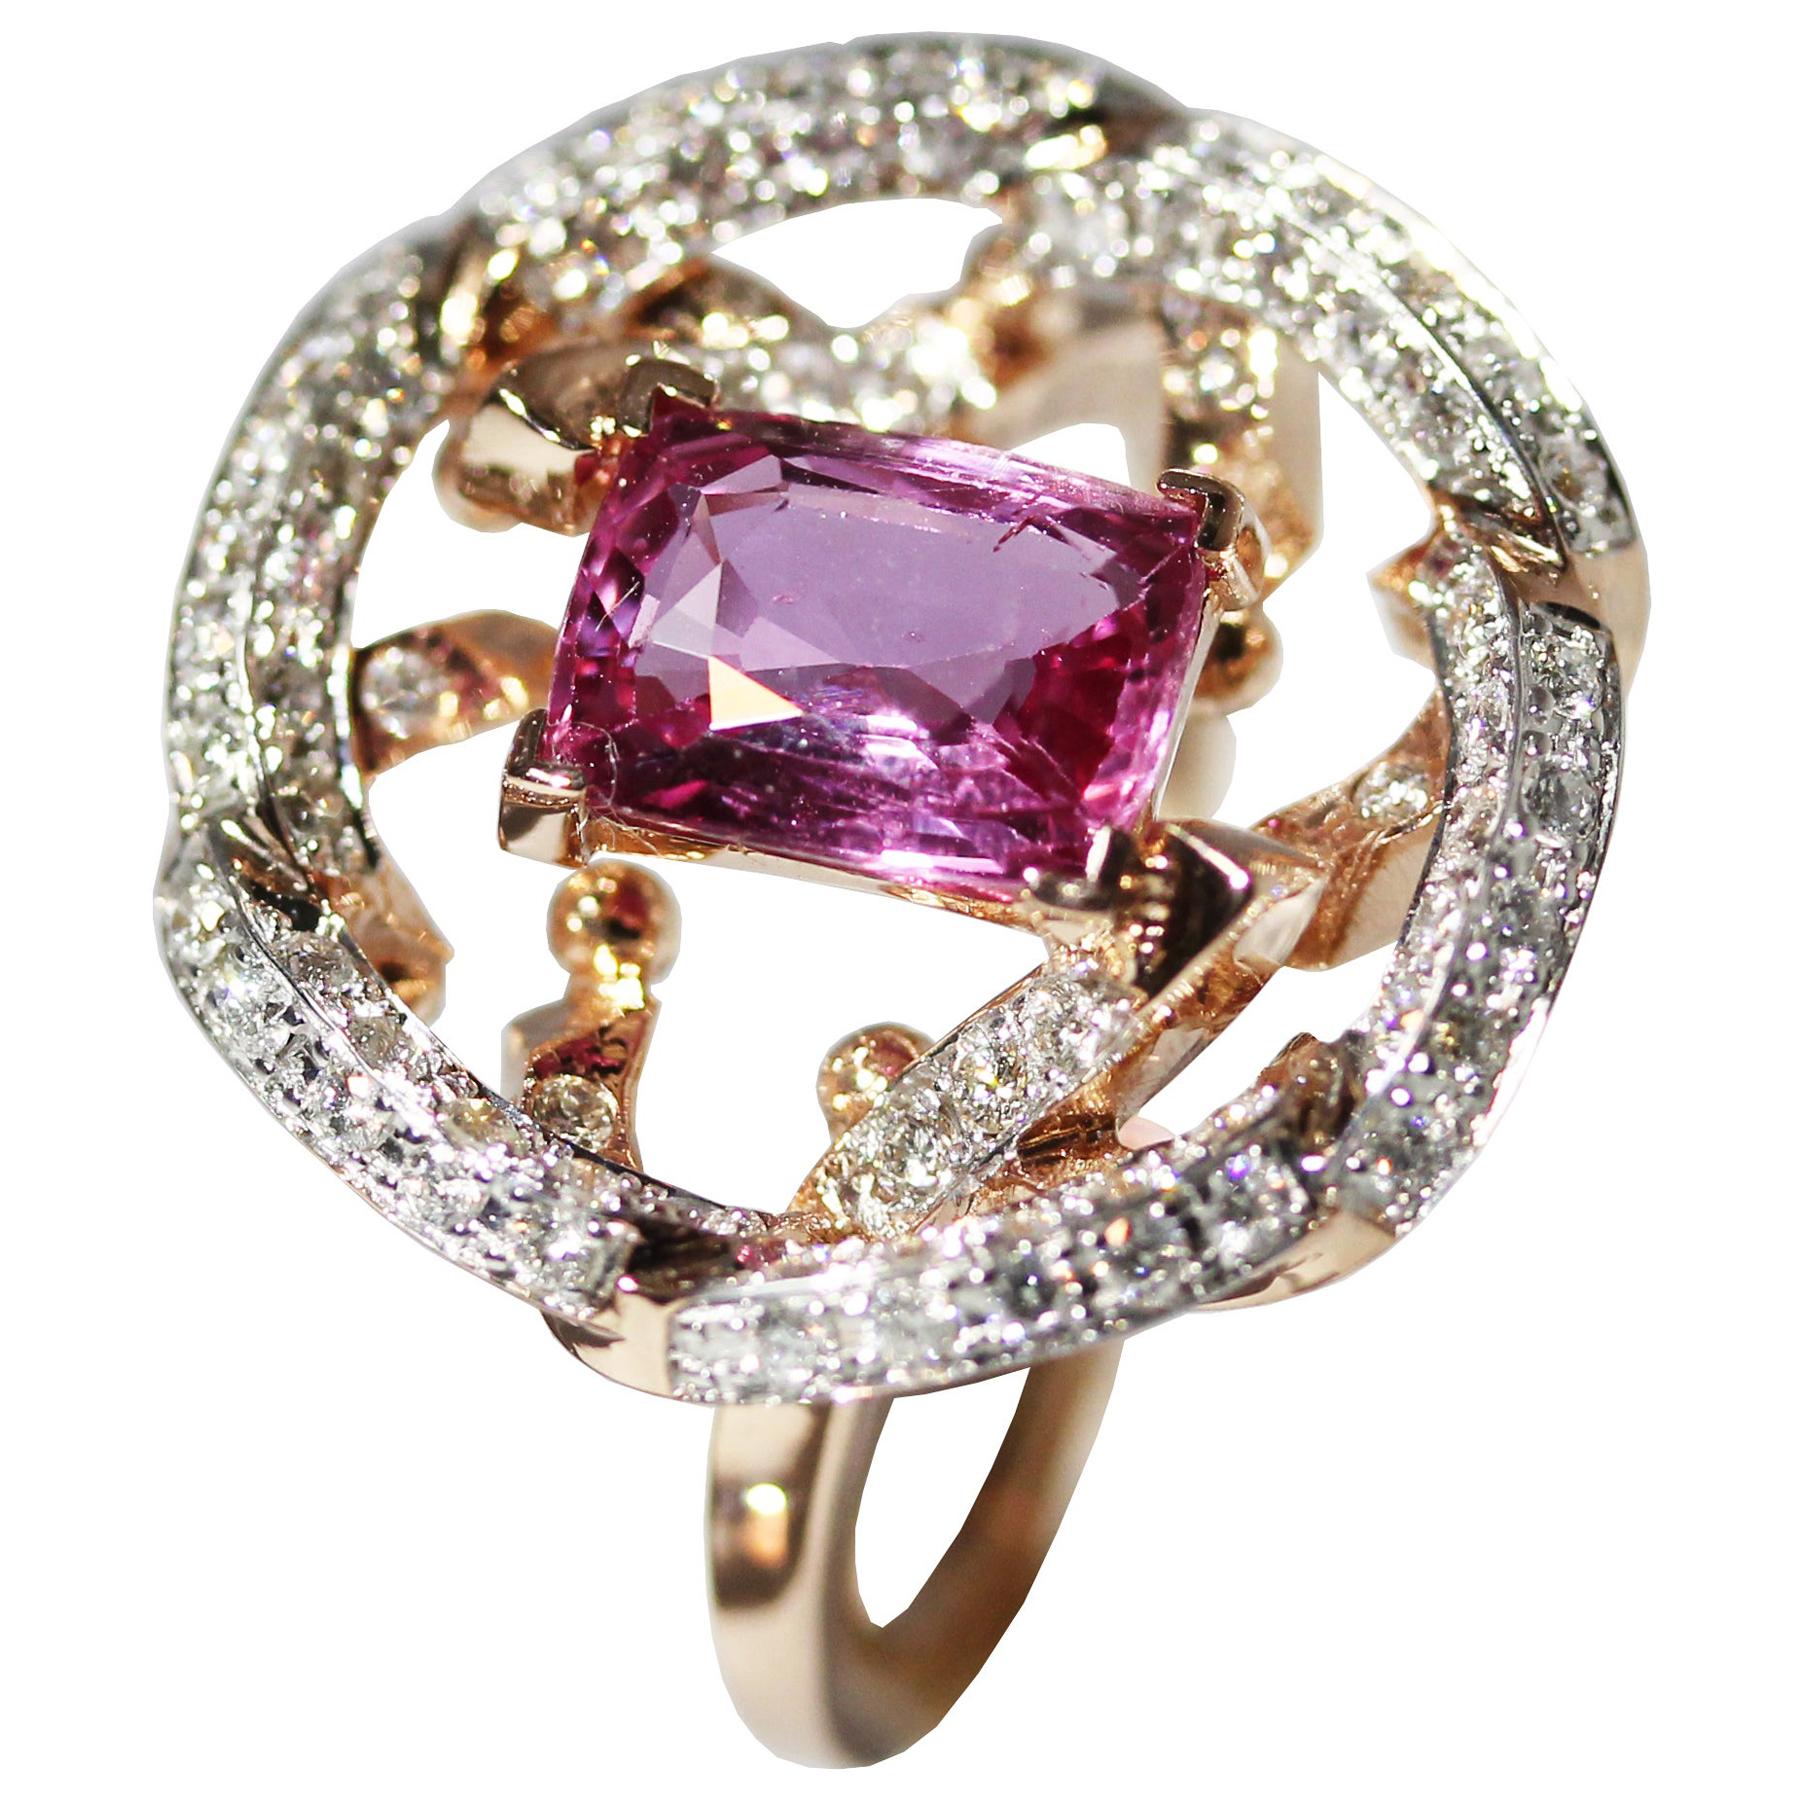 MAIKO NAGAYAMA 1.96 Carat Natural Pink Sapphire and Diamond Cocktail Ring For Sale